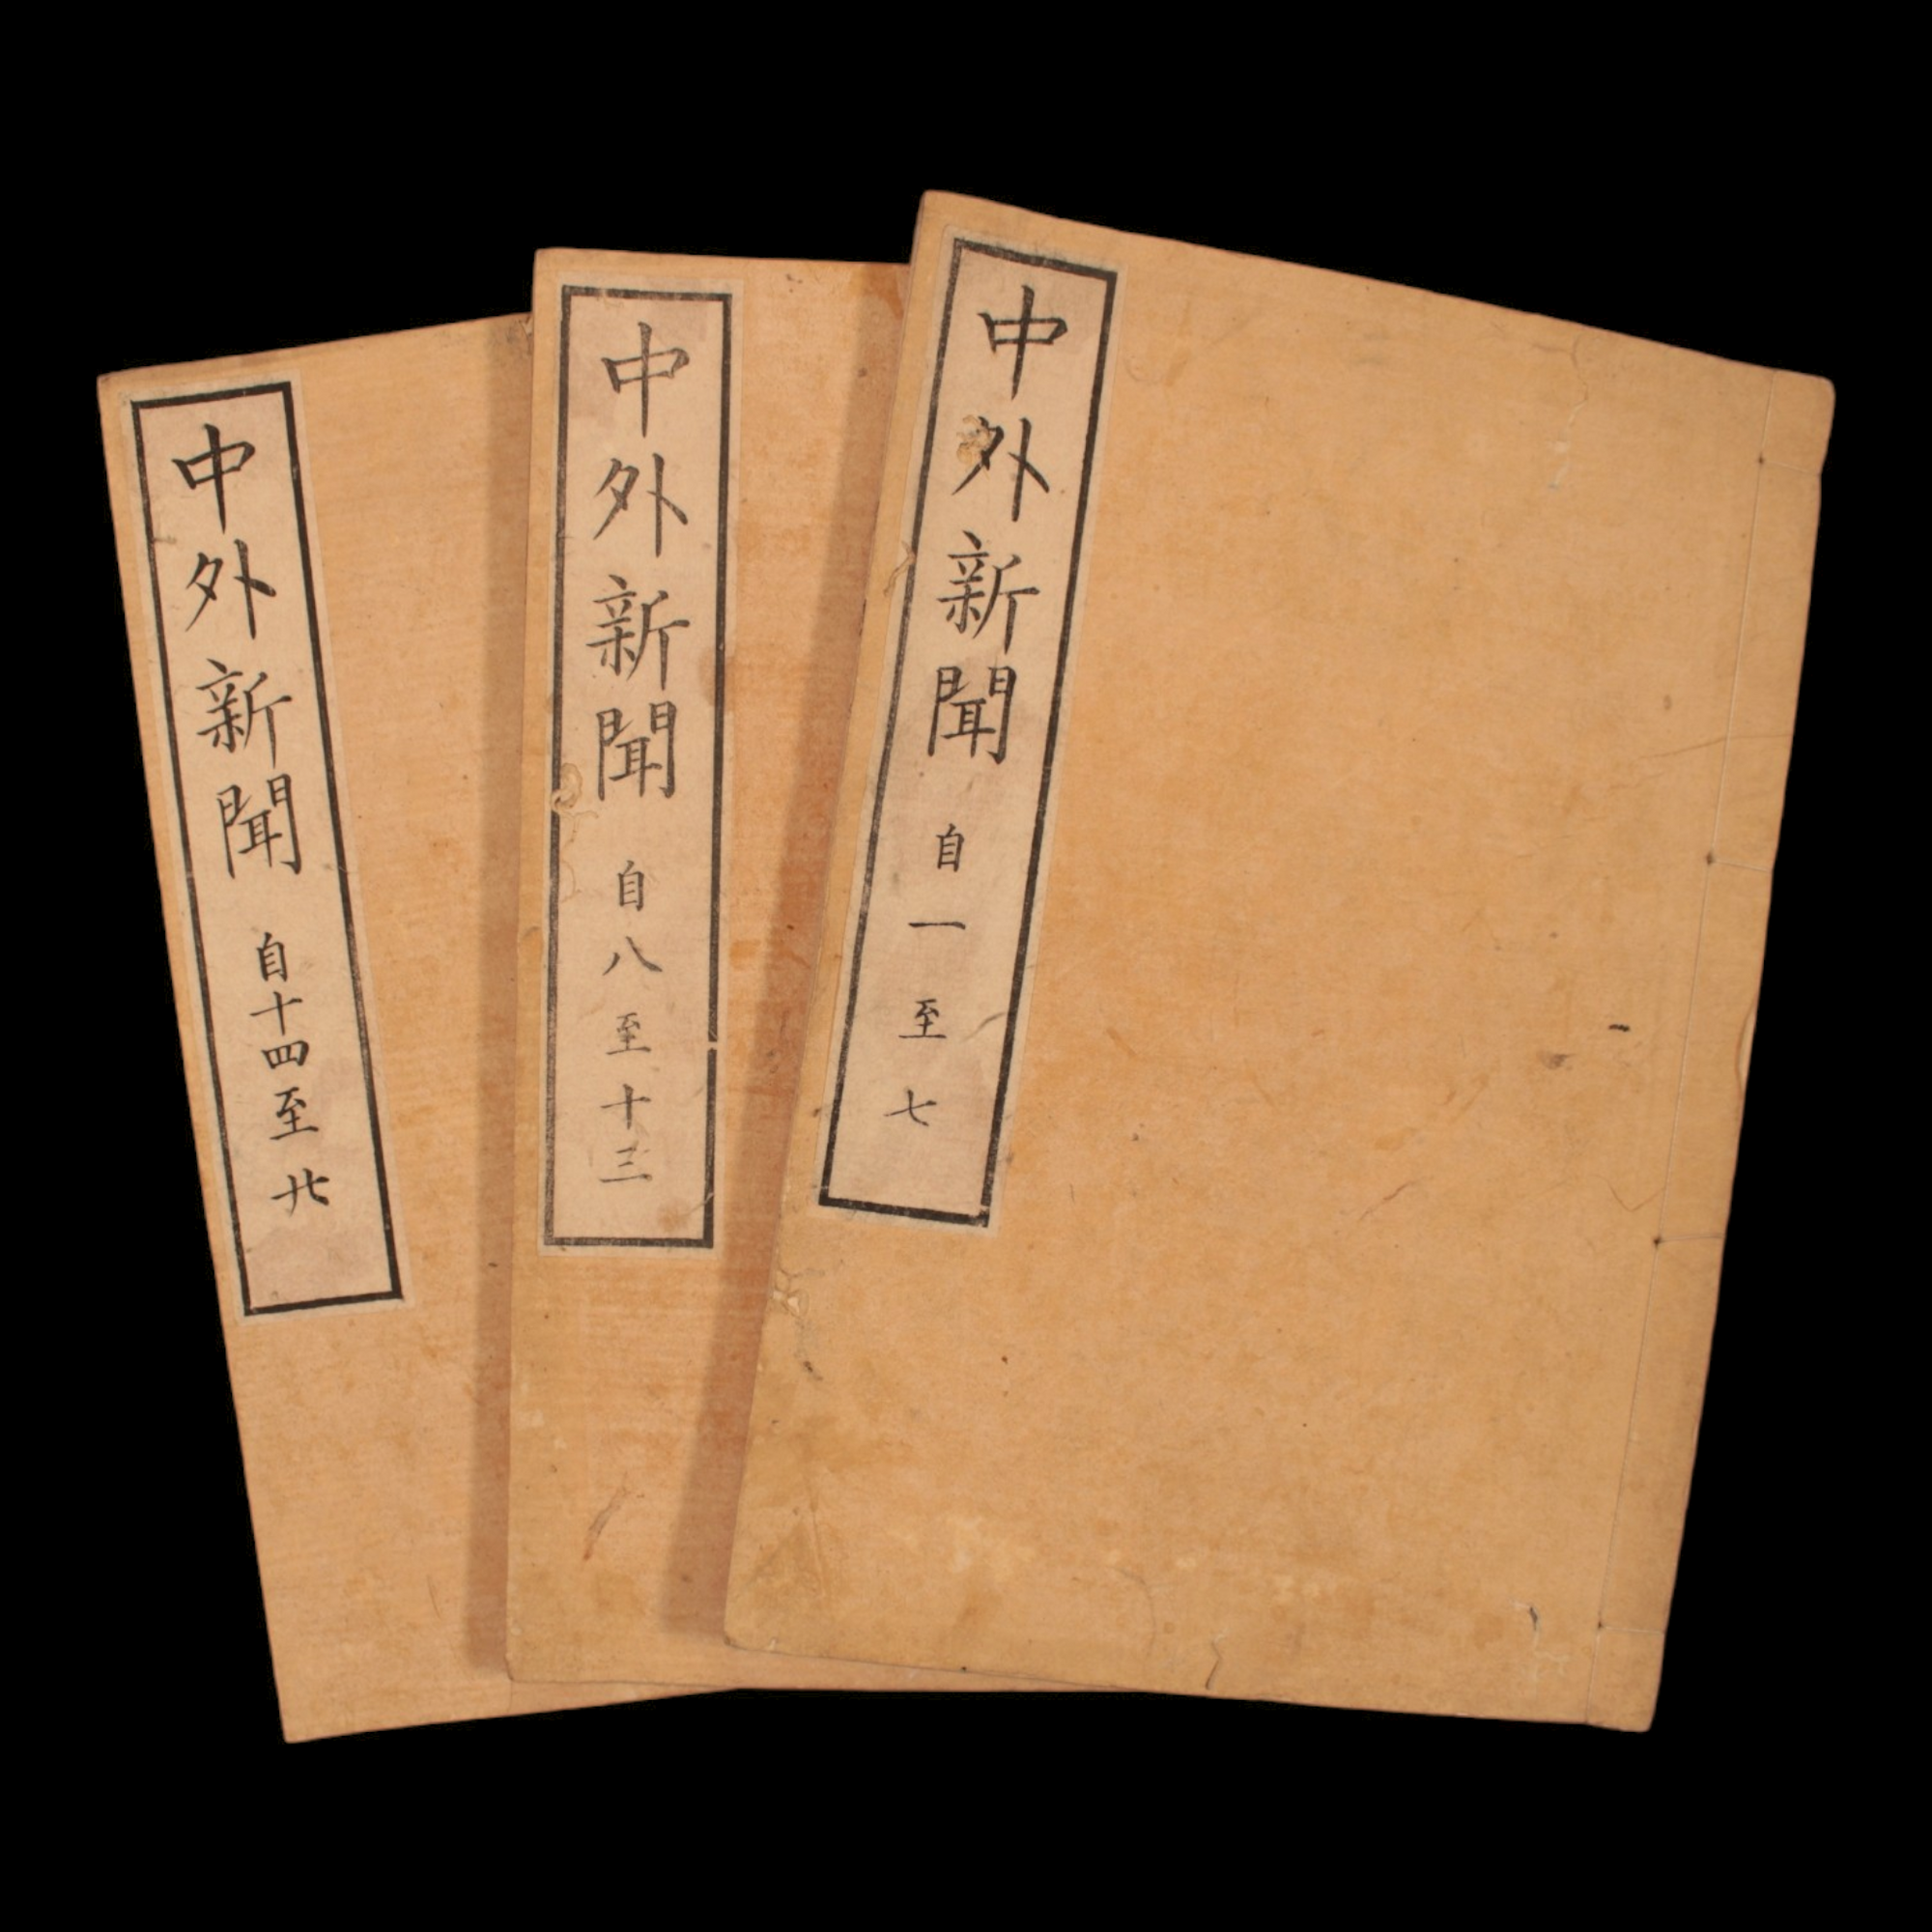 Domestic and Foreign News, Three Editions - Keio 4 (1868) - Keio Era Japan